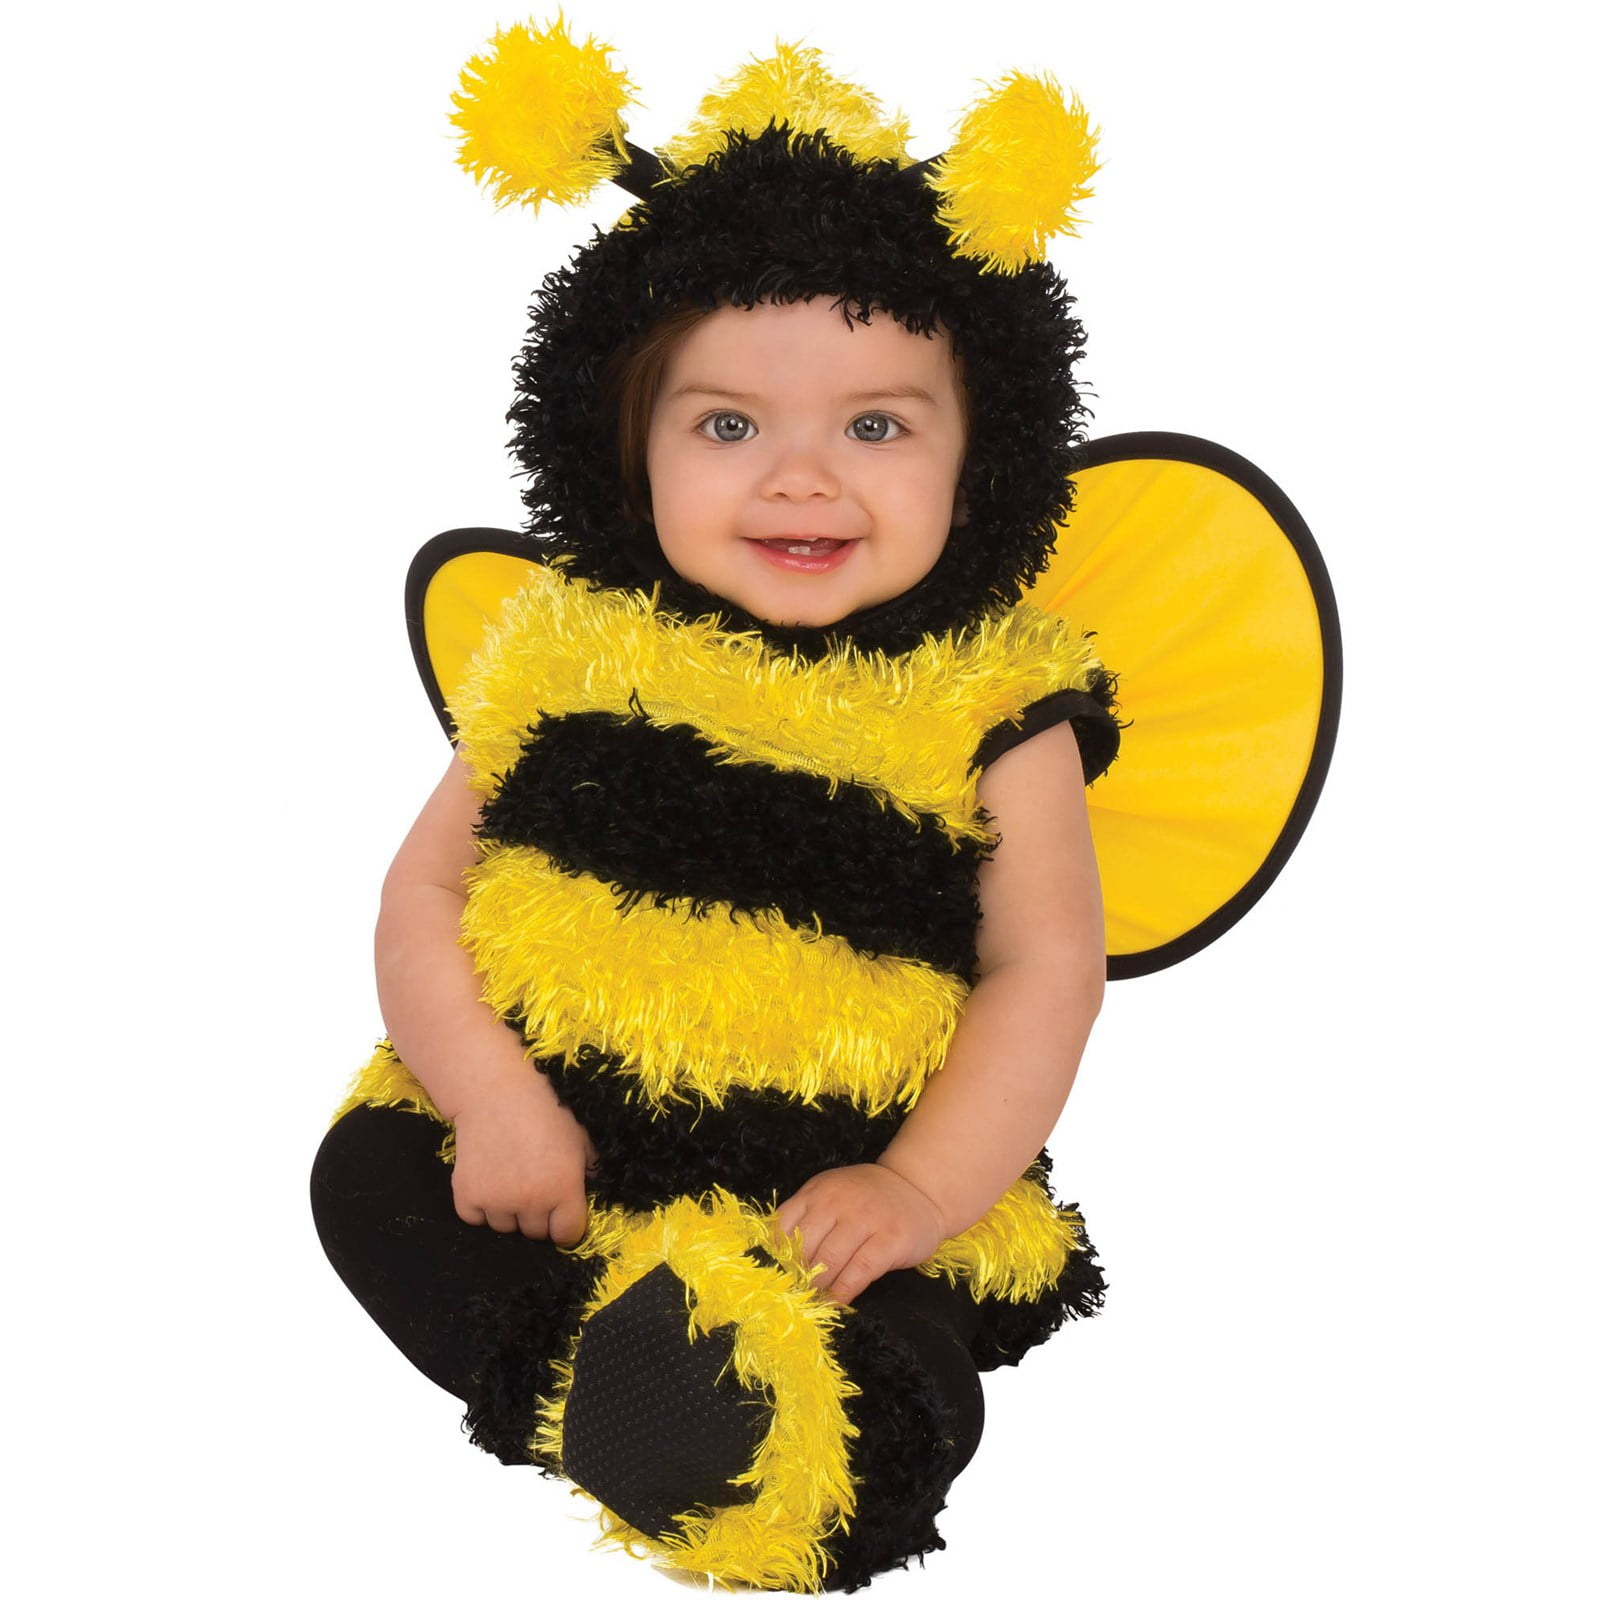 Baby bee baby outfit Bee baby shower Baby bee outfit Bee coming home outfit Newborn bee outfit little honey baby Baby bee gift